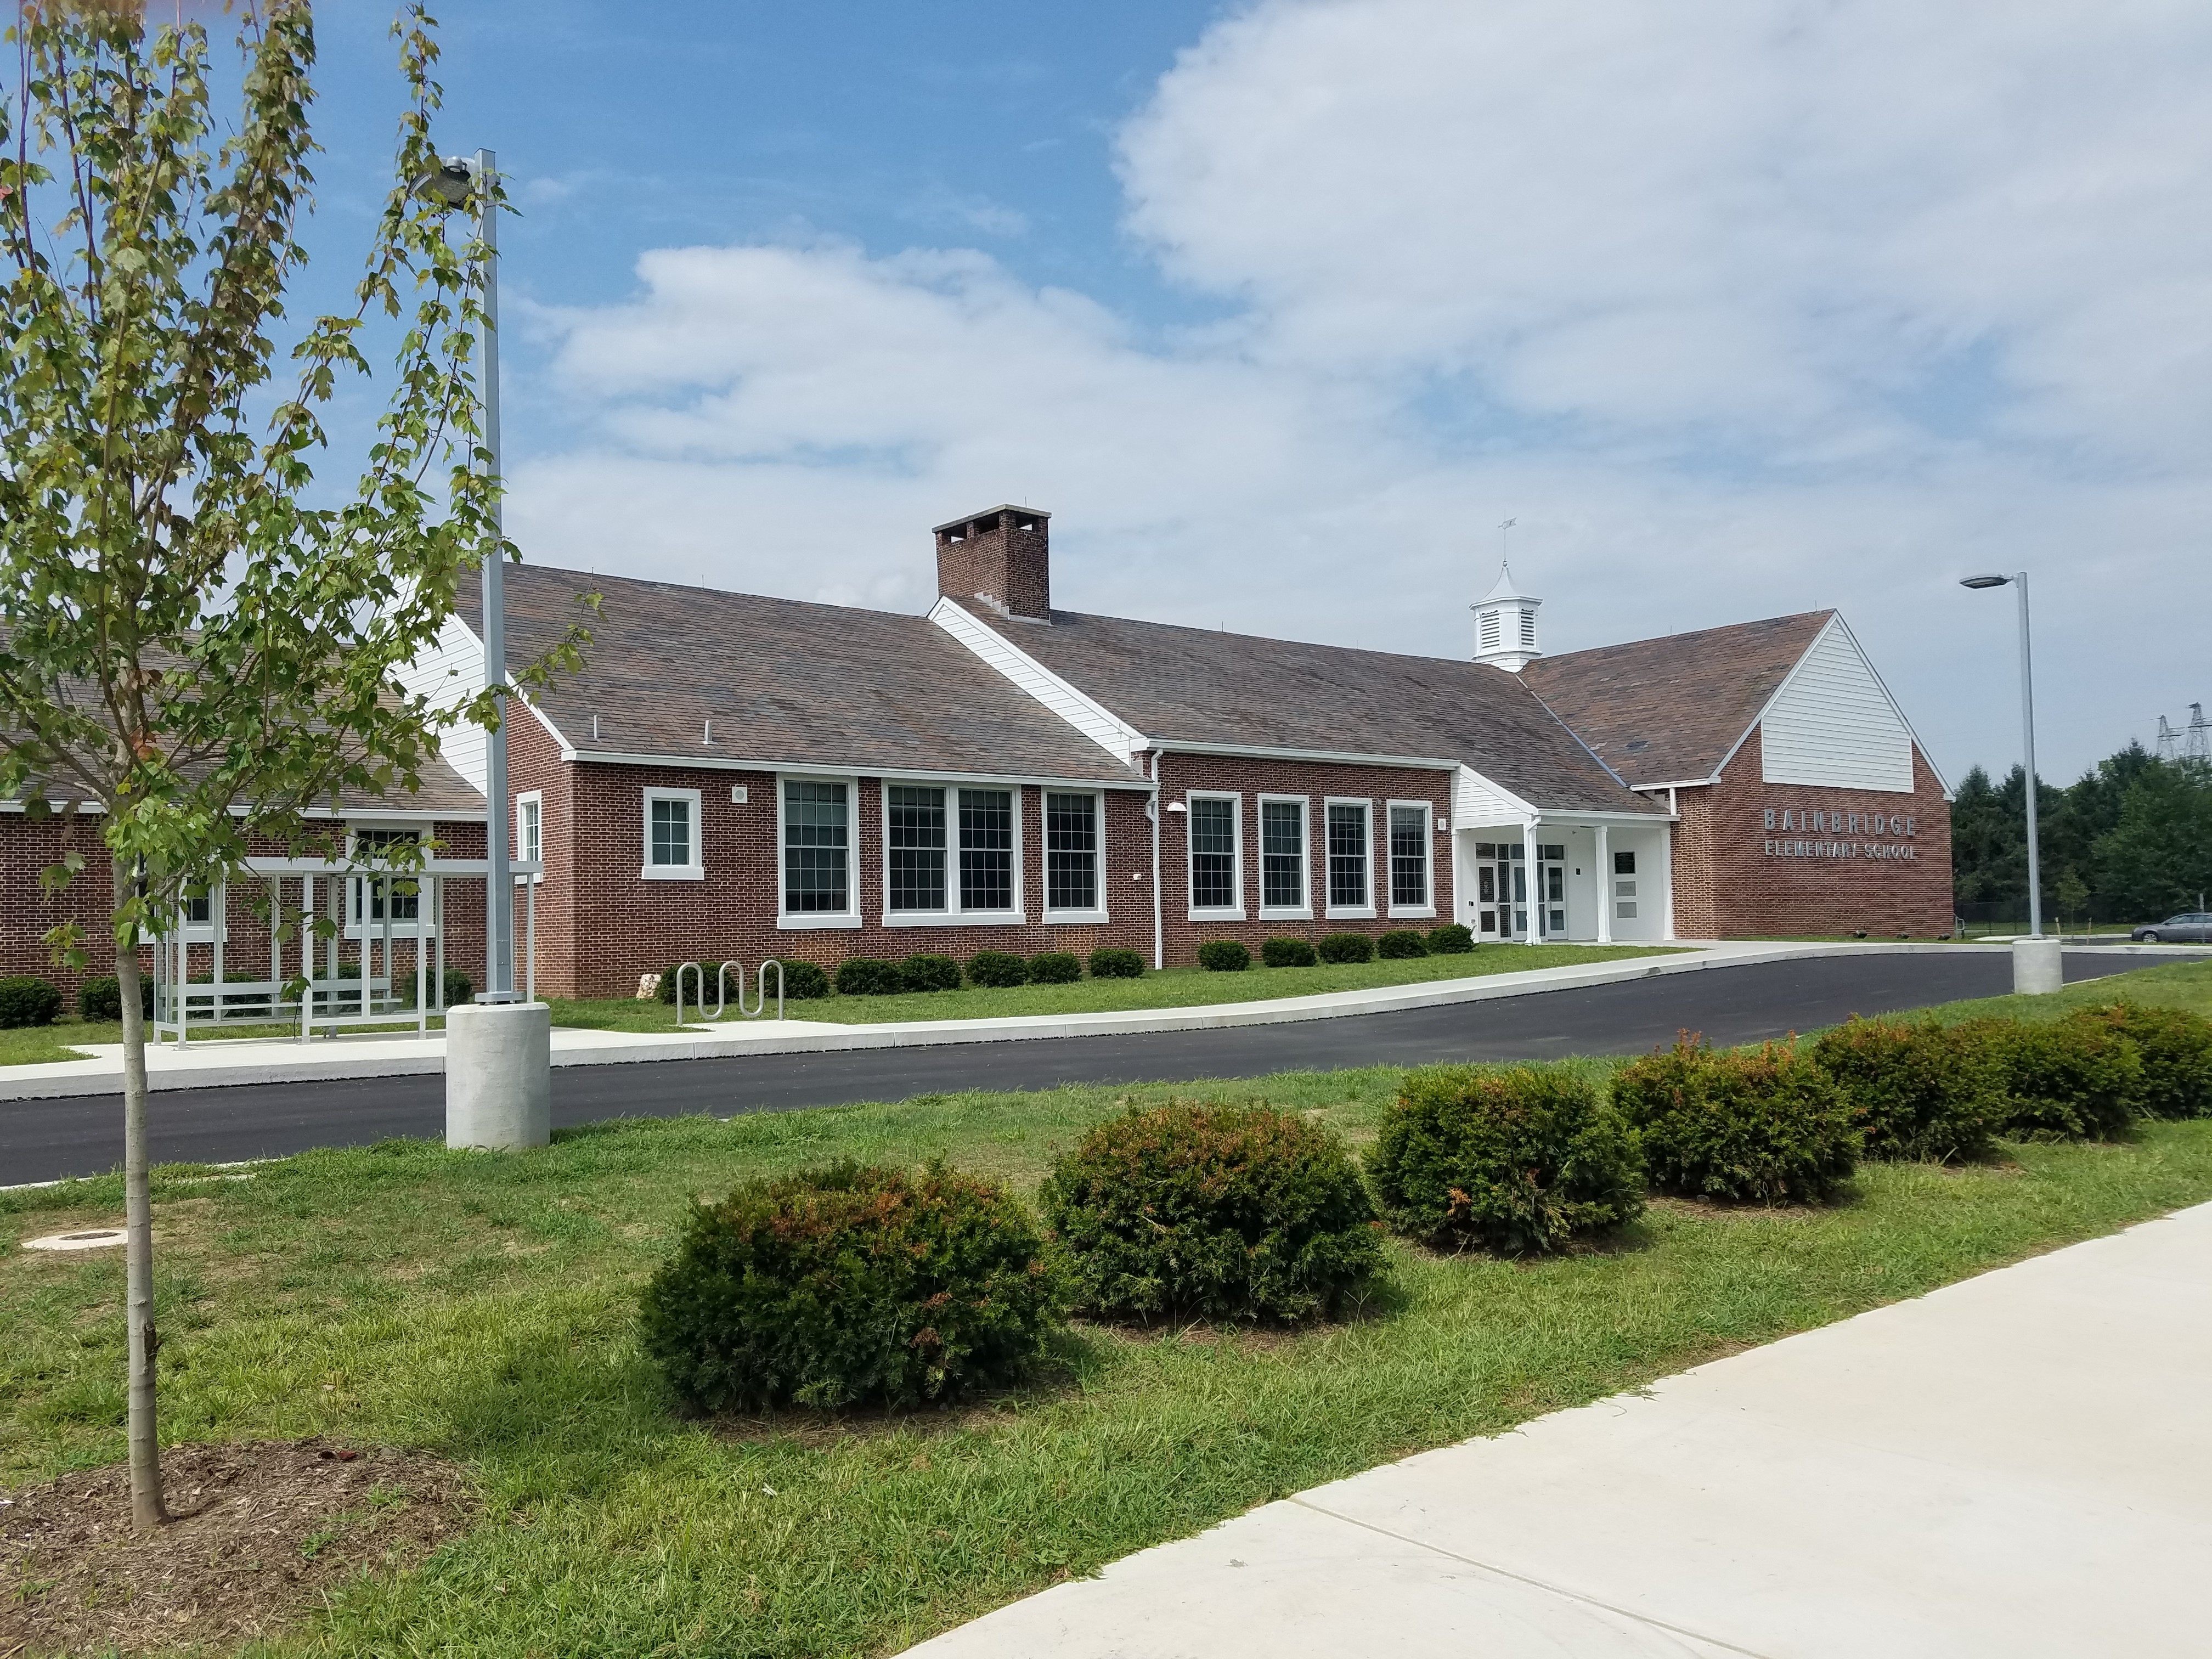 Bainbridge Elementary School